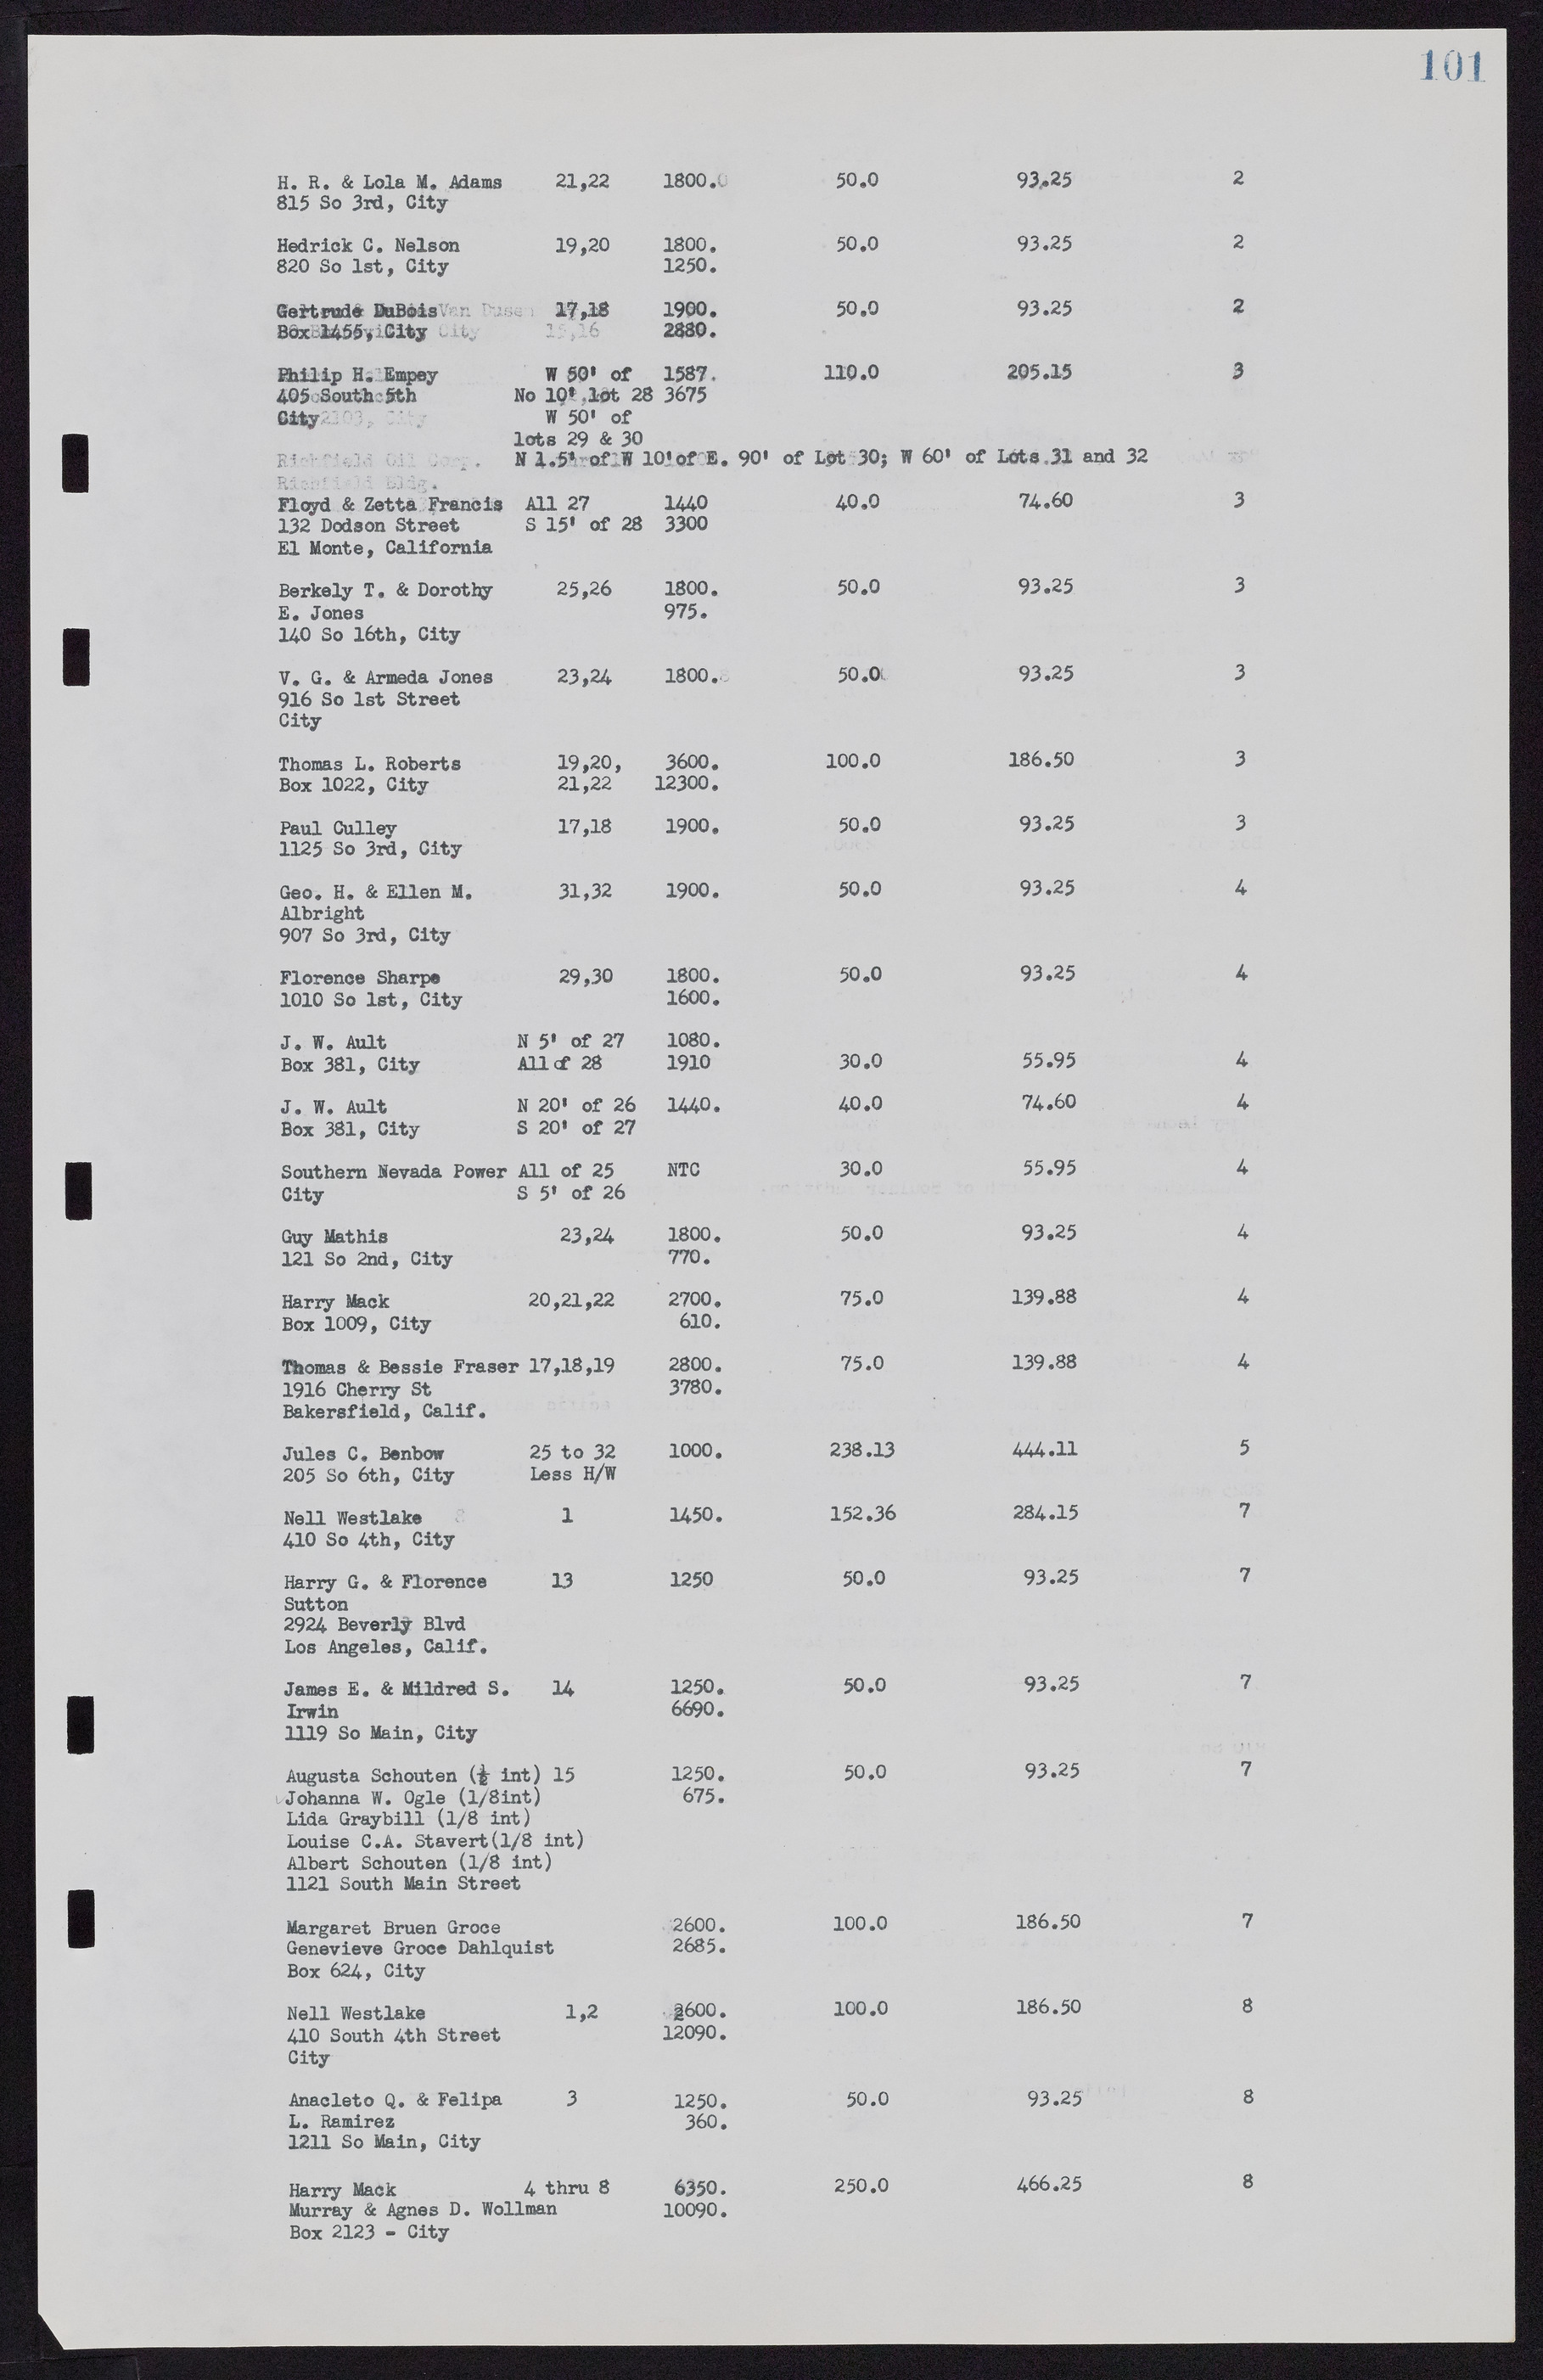 Las Vegas City Commission Minutes, November 7, 1949 to May 21, 1952, lvc000007-109